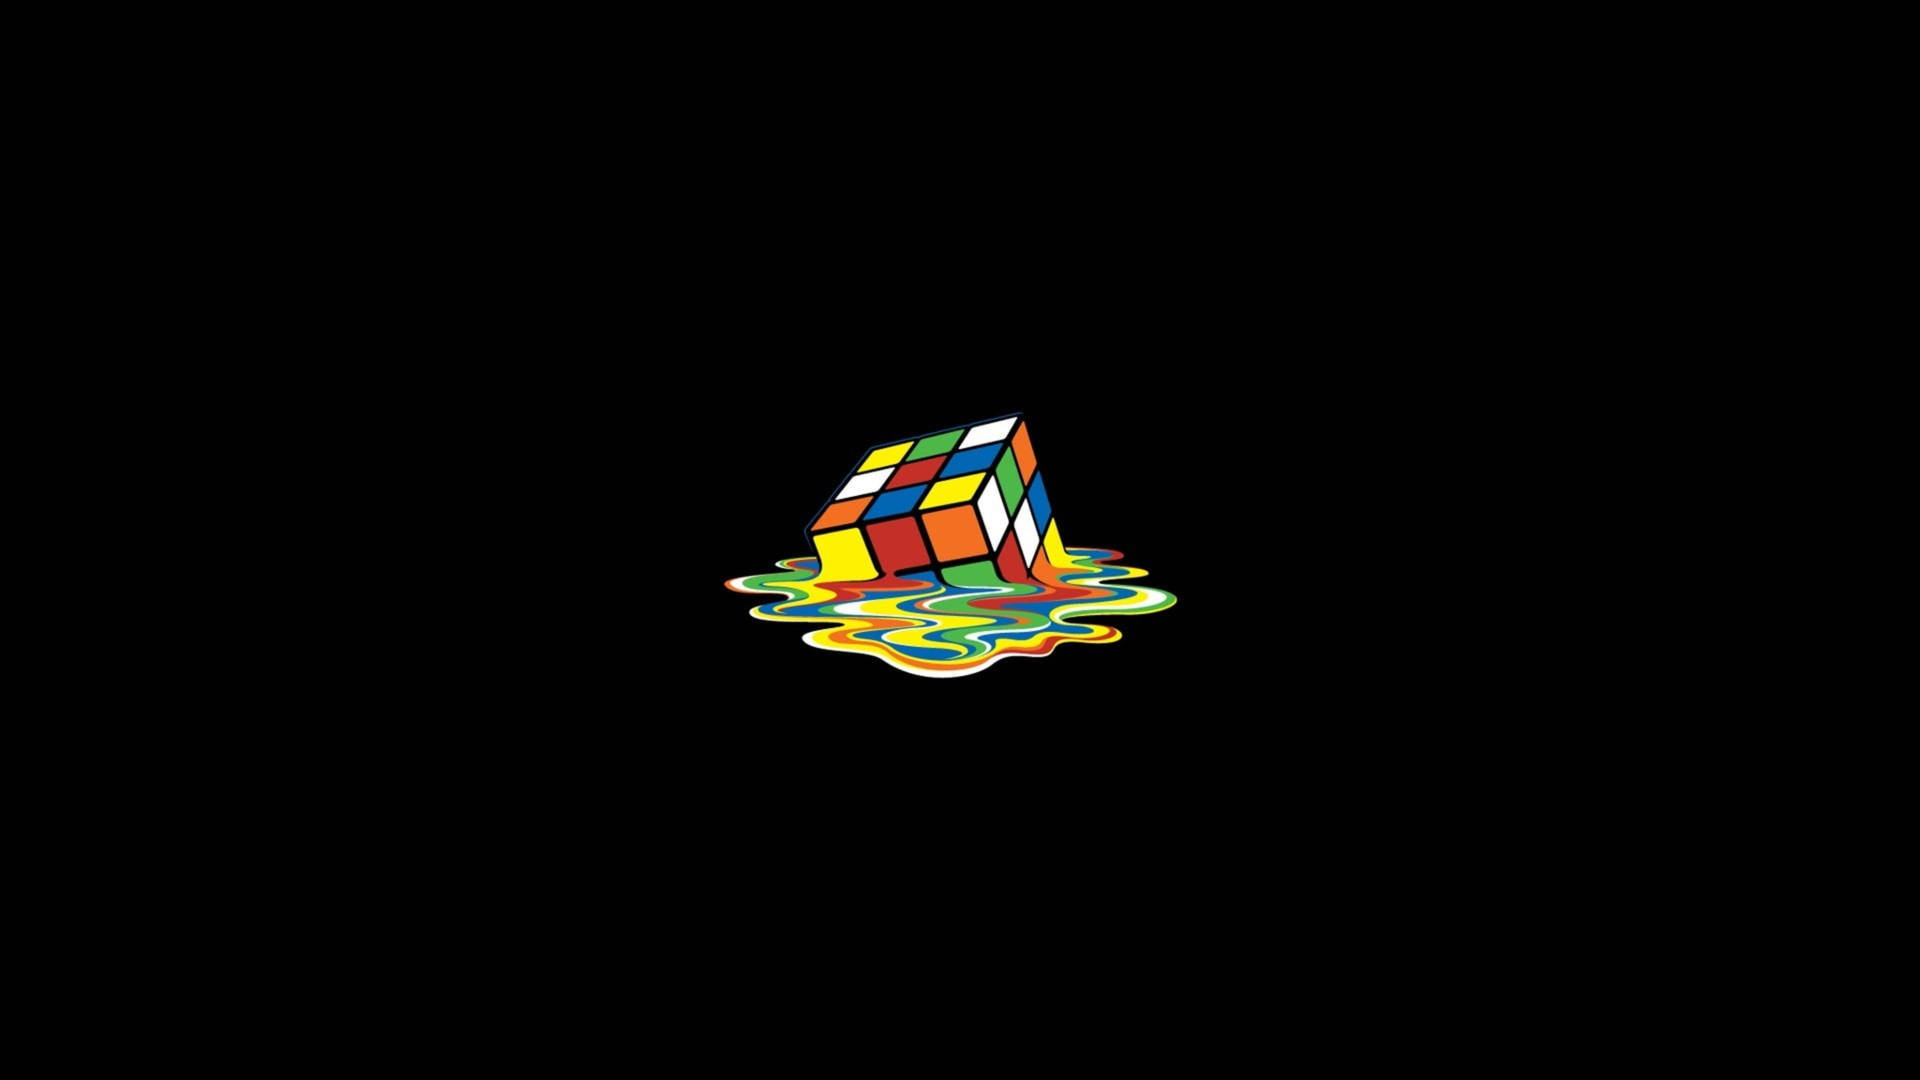 Melting Rubik's Cube Dark Abstract Wallpaper